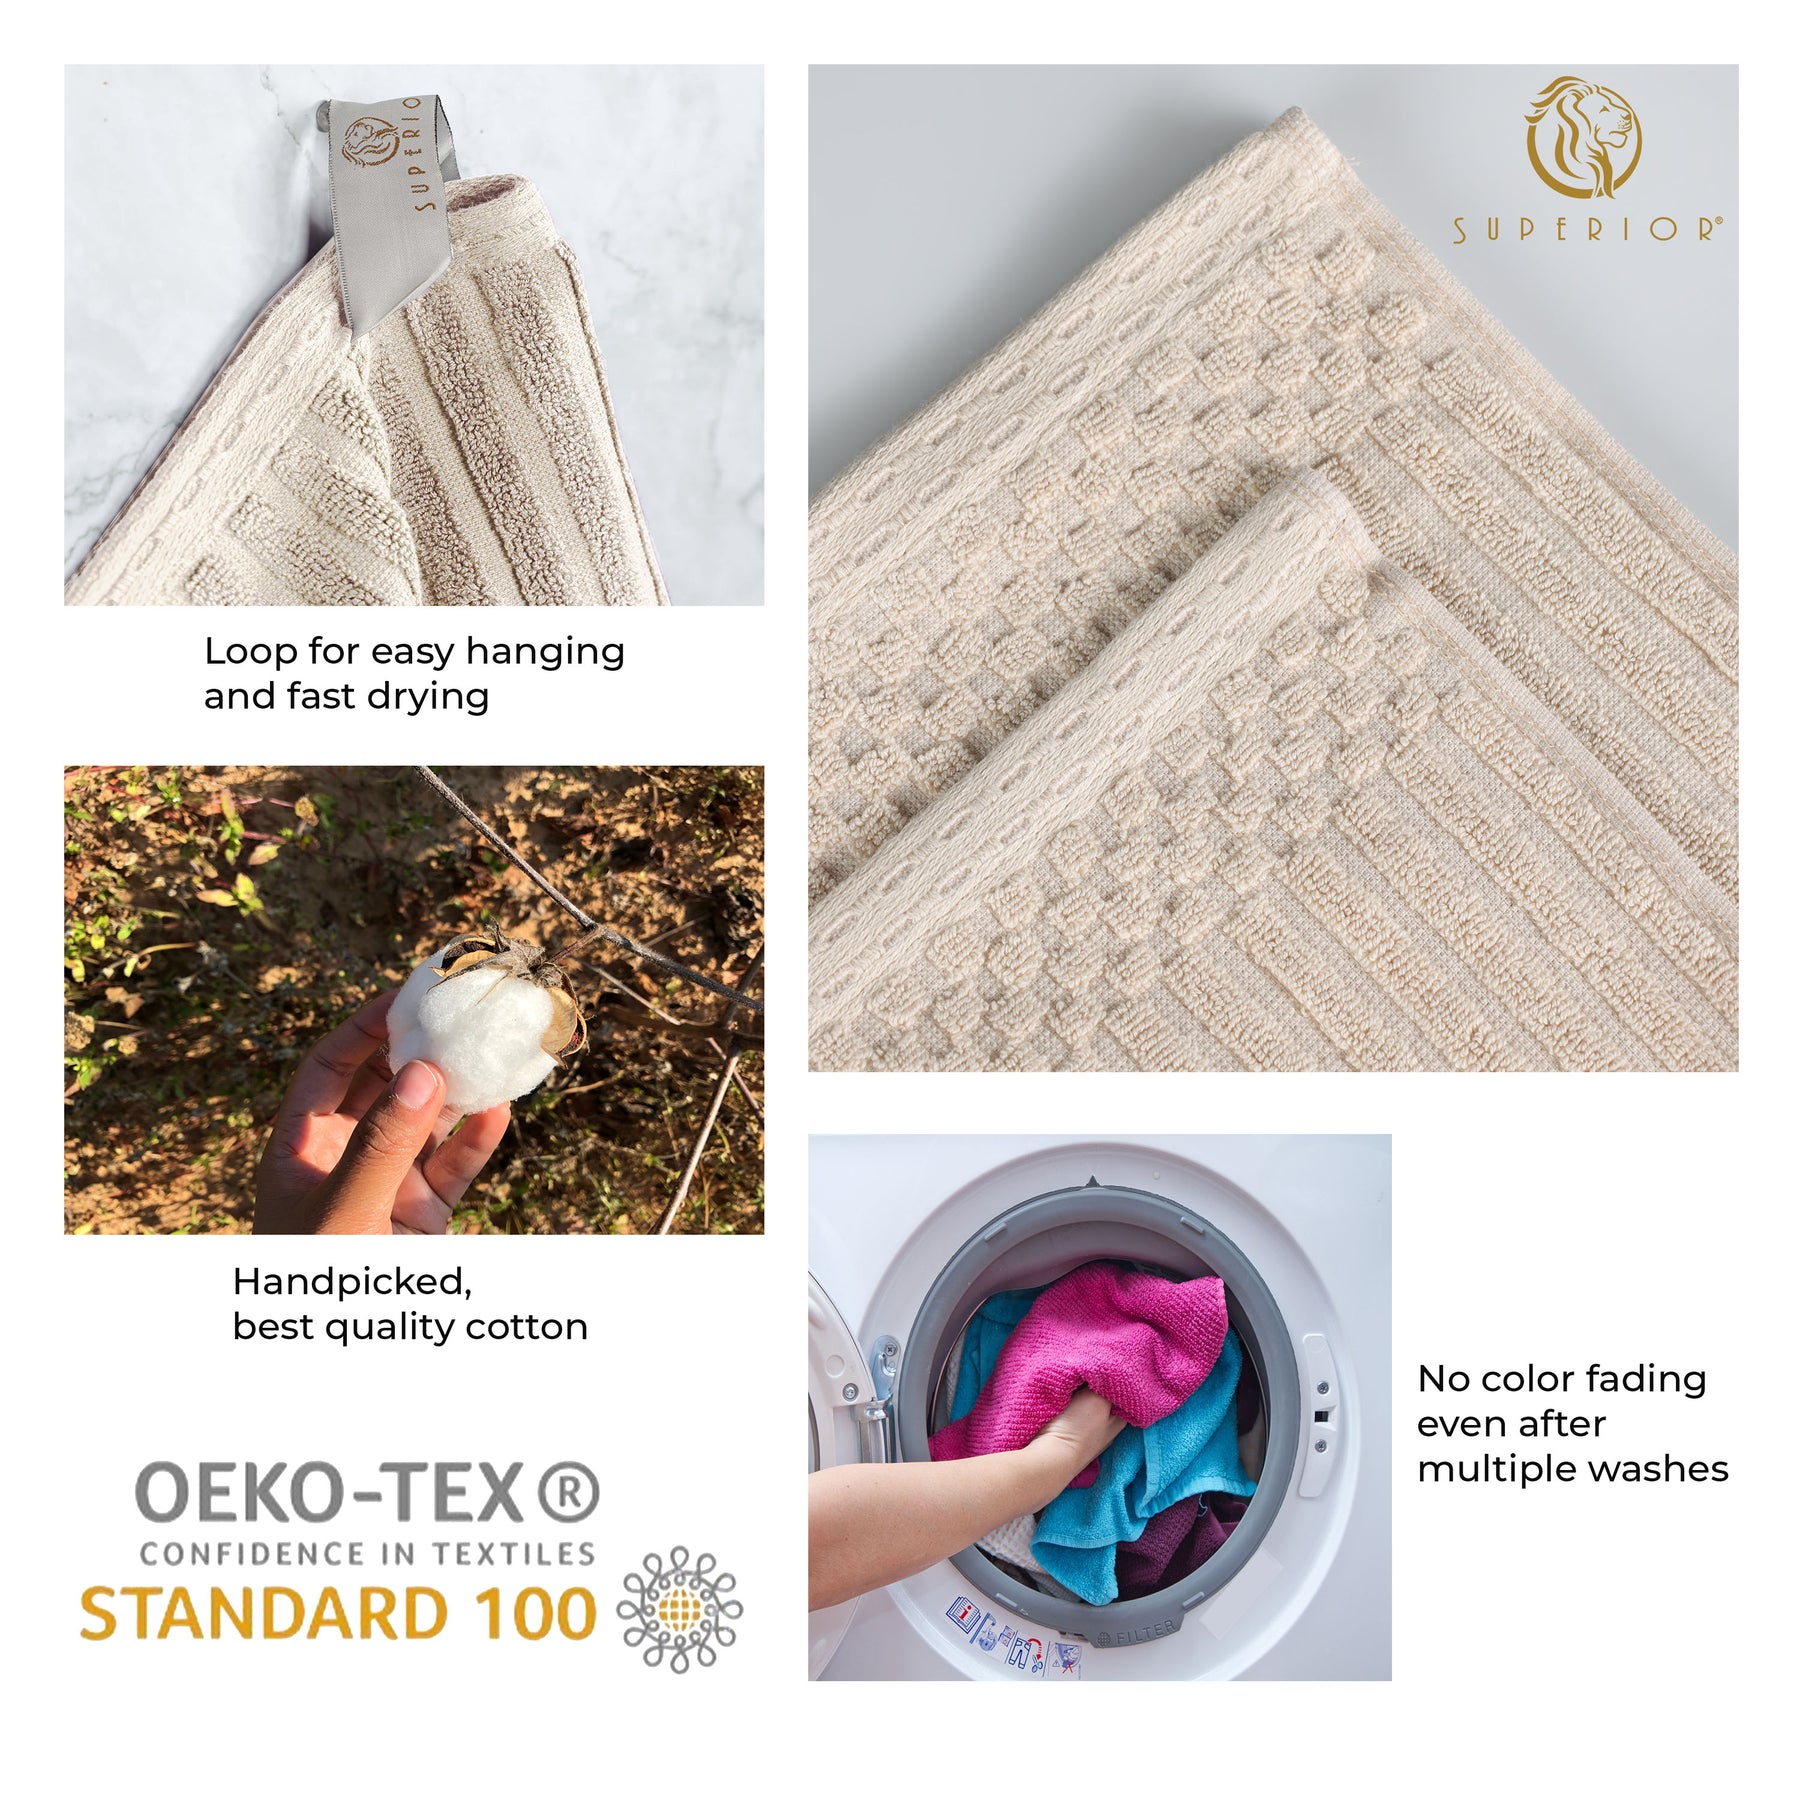 Superior Soho Ribbed Textured Cotton Ultra-Absorbent Bath Sheet & Bath Towel Set - Ivory